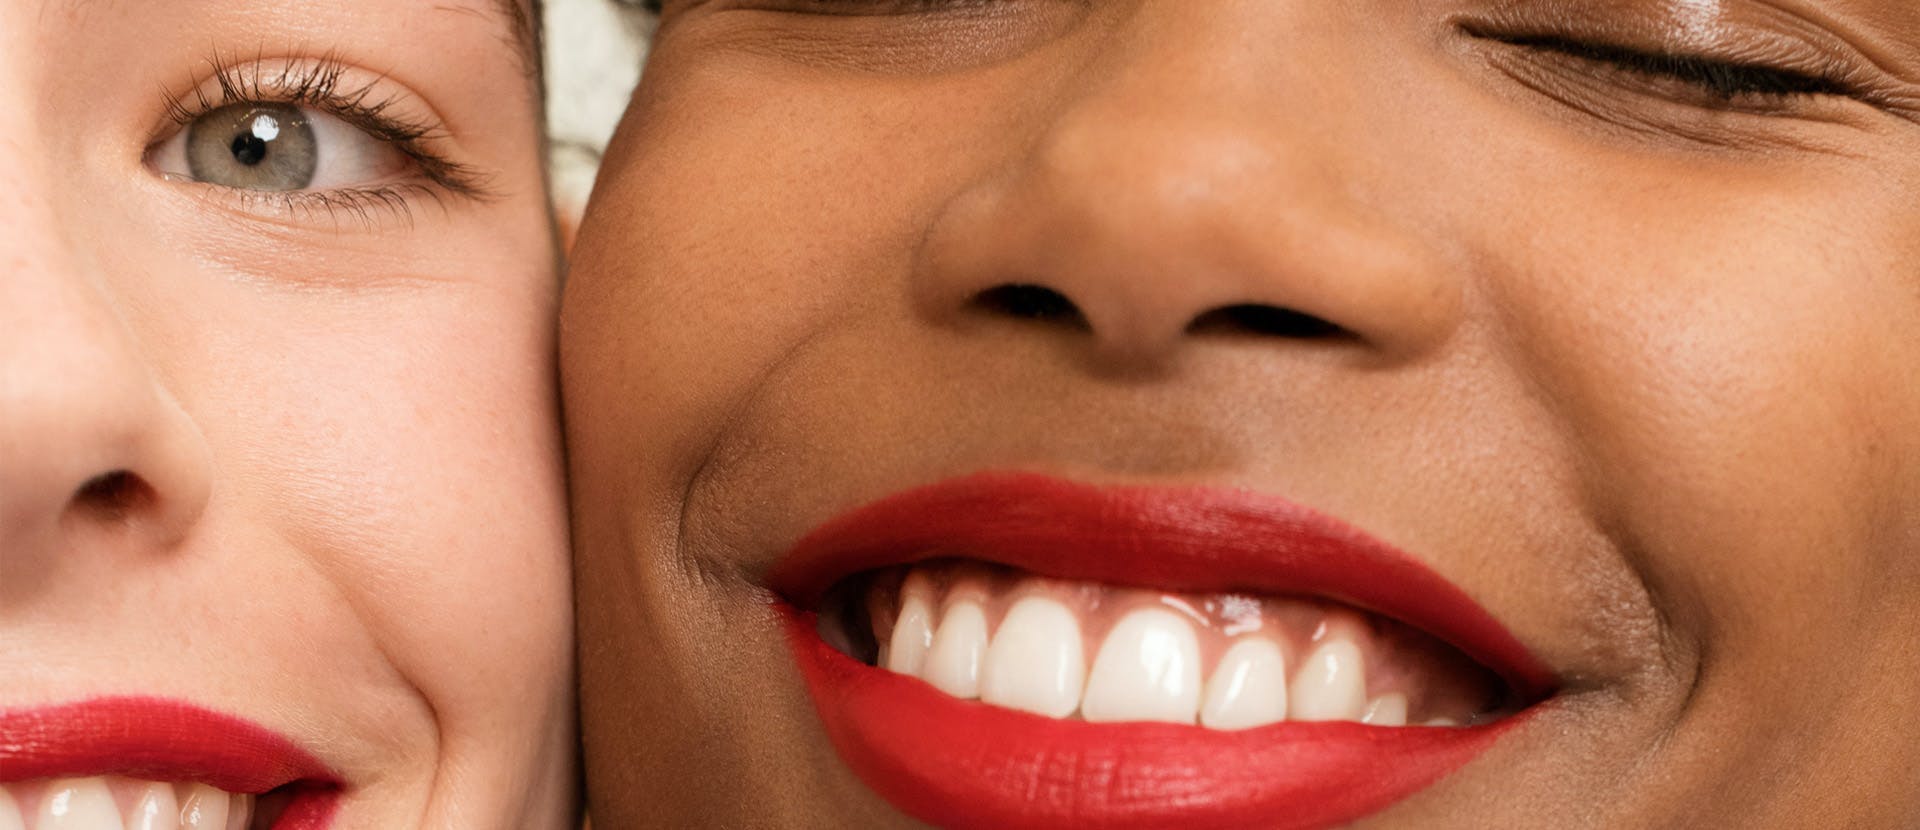 lip teeth mouth person human lipstick cosmetics